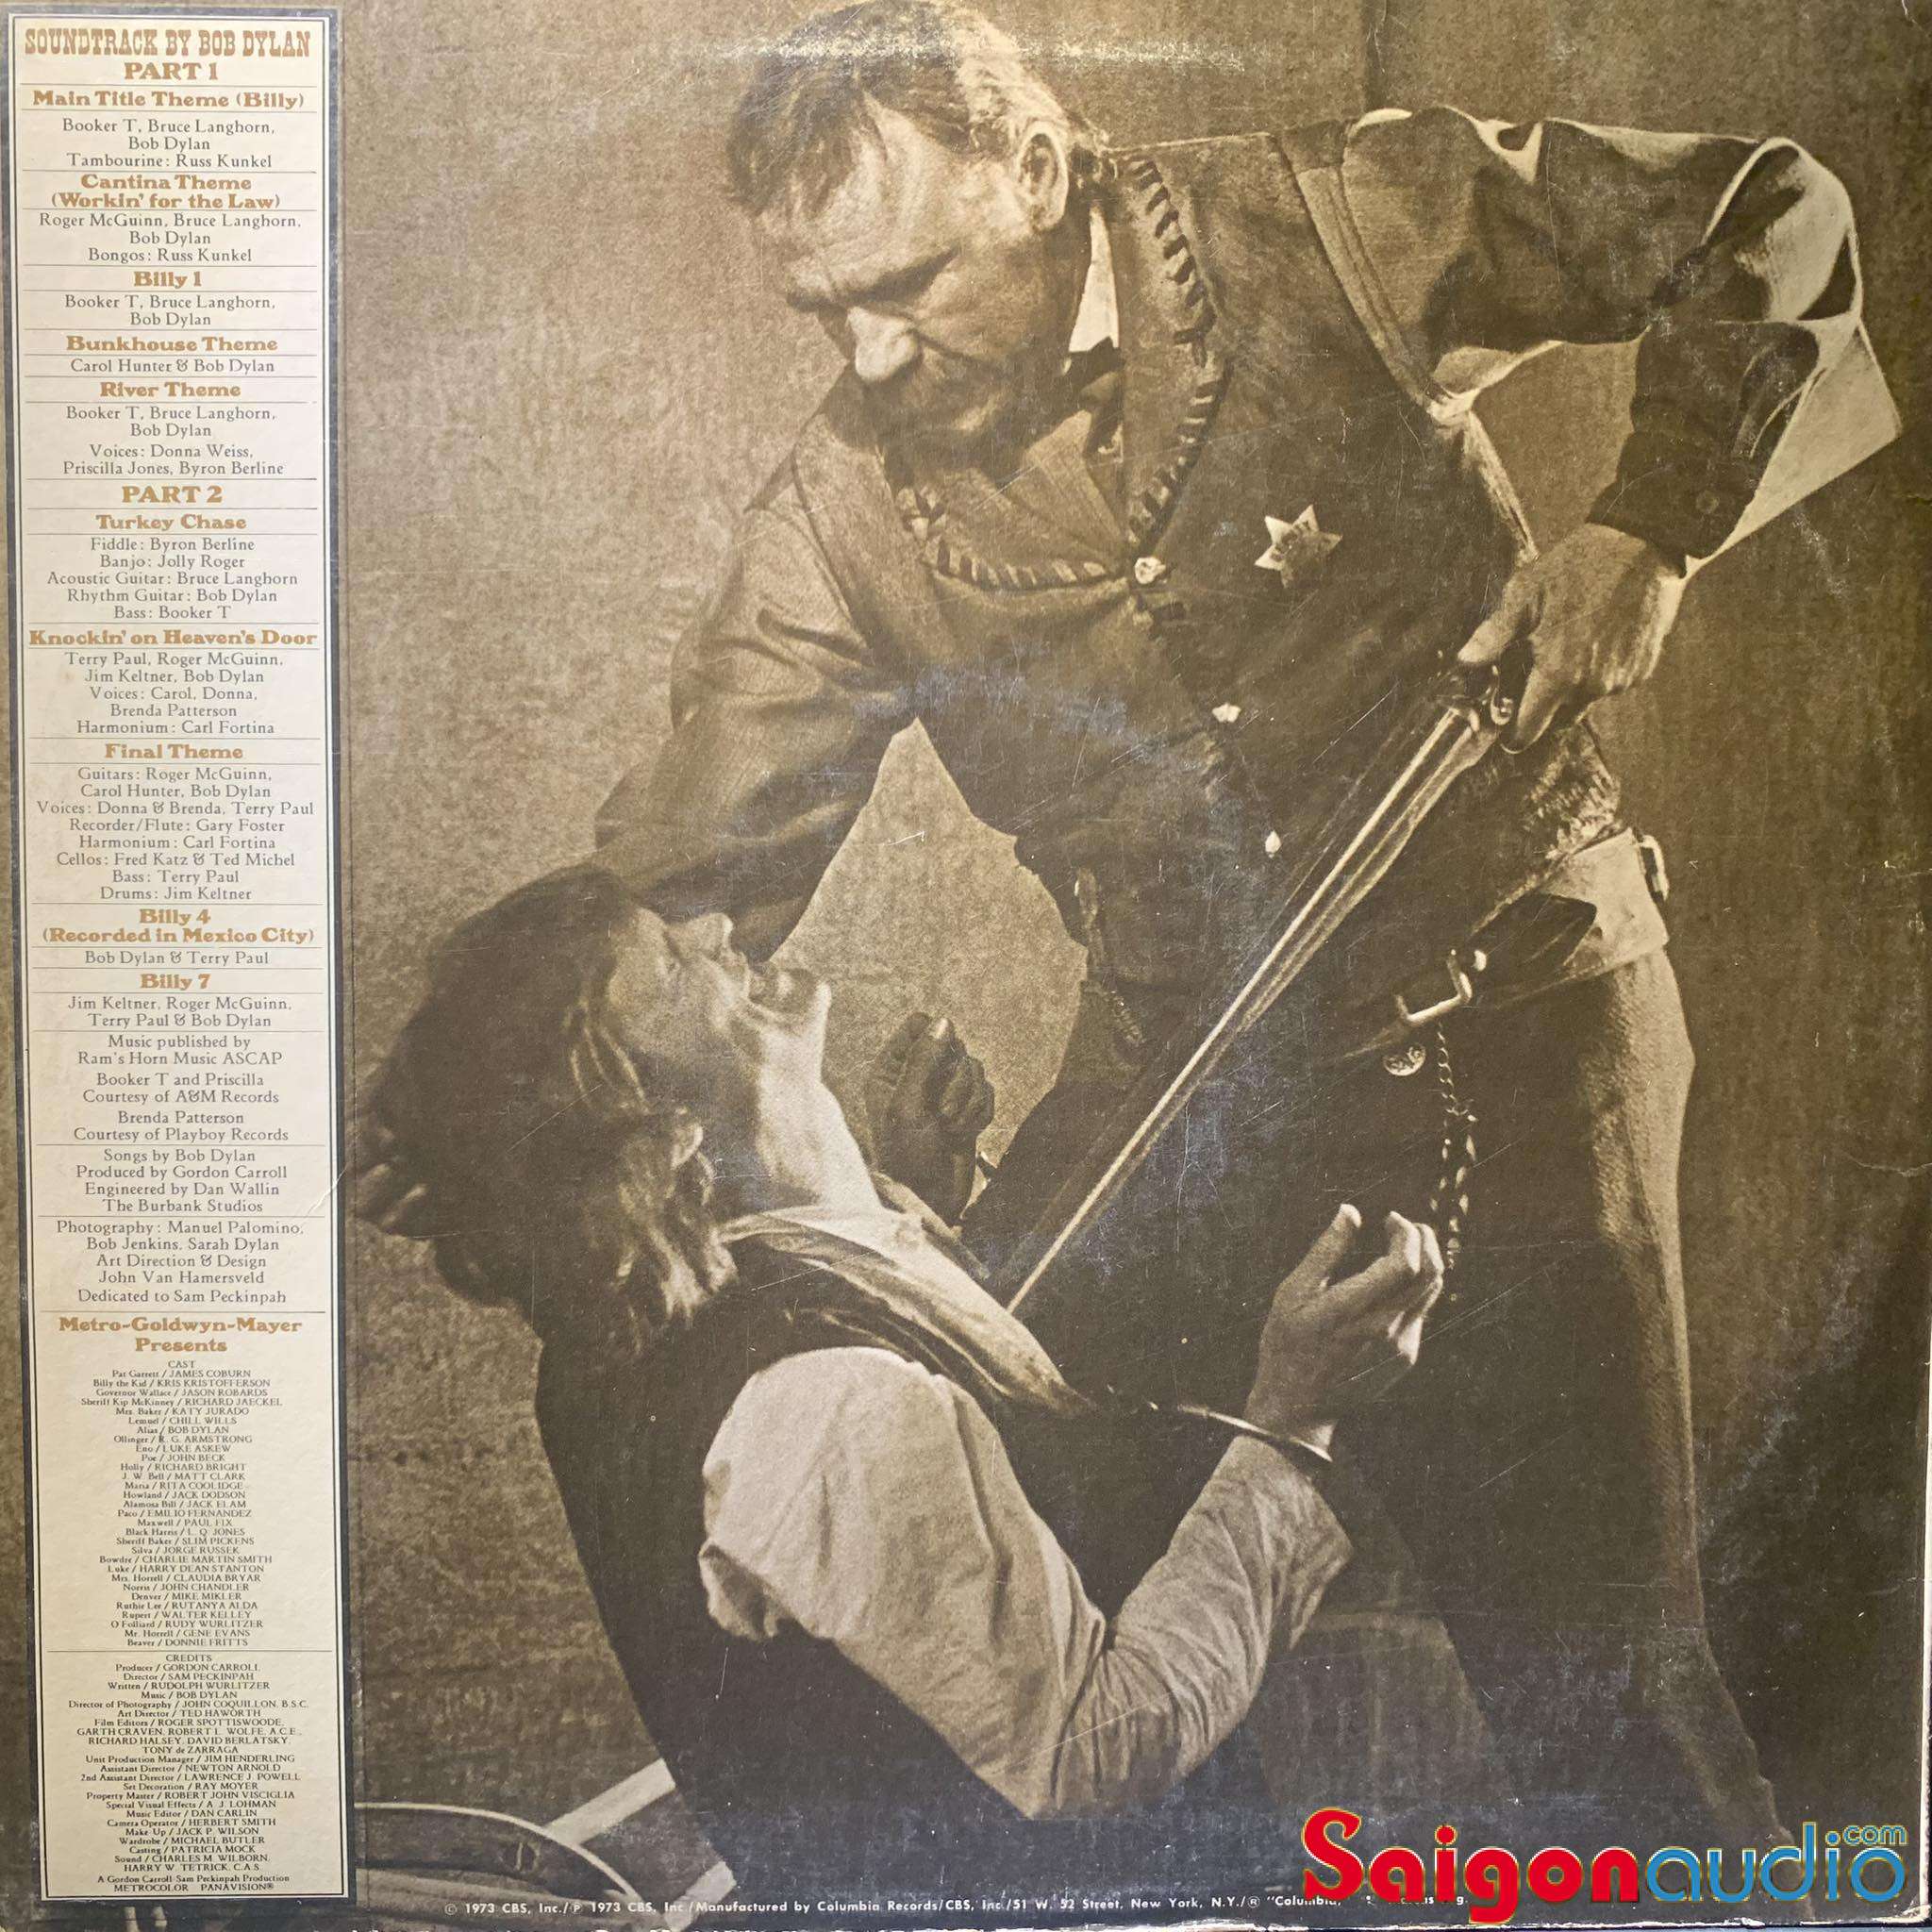 Đĩa than Bob Dylan - Pat Garrett and Billy the Kid (Original Soundtrack) | LP Vinyl Records